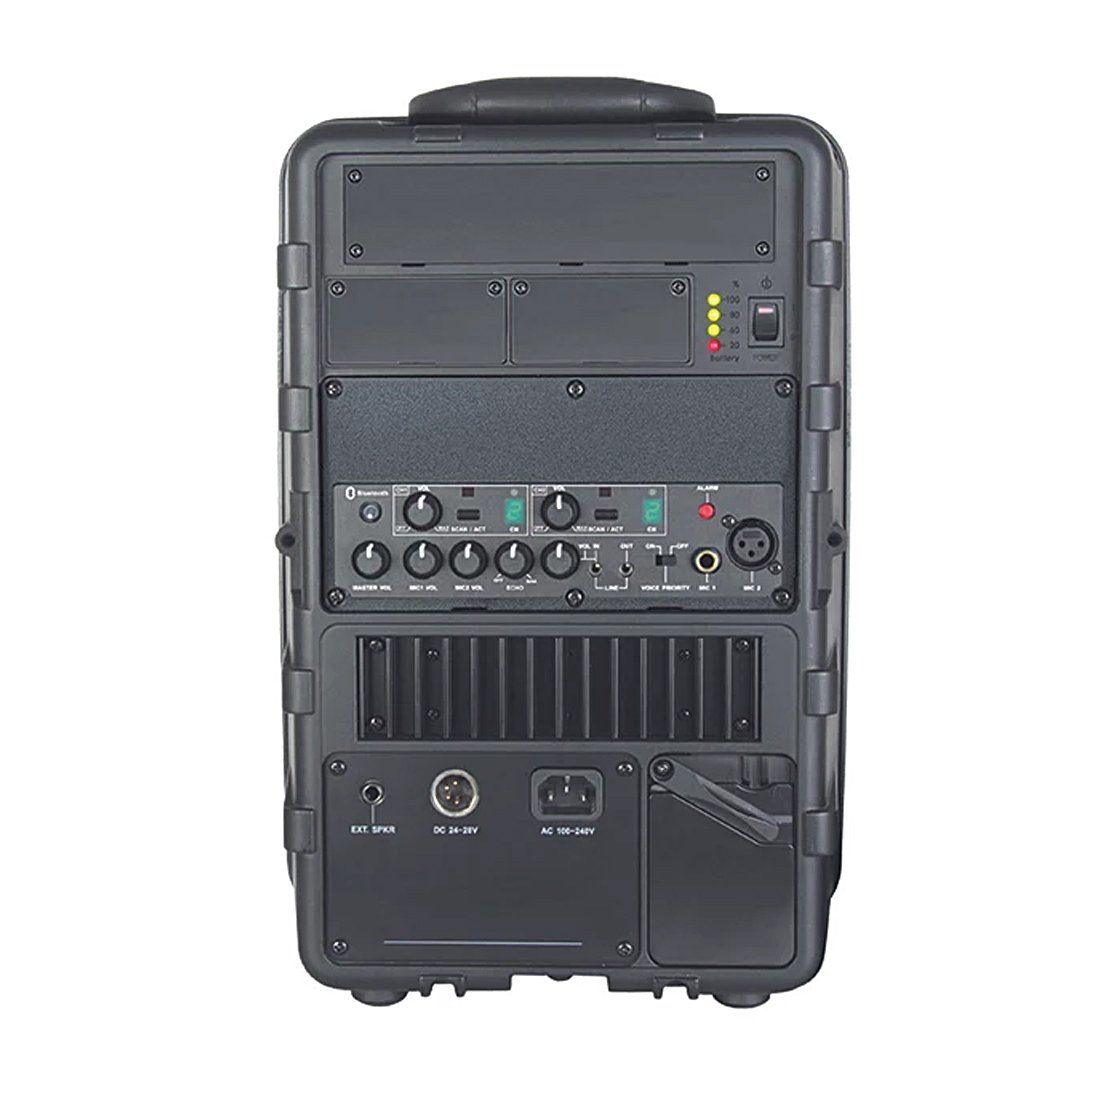 Lautsprecher Portable-Lautsprecher mit W) Mipro MA-505R2 Handsender-Mikrofon (Bluetooth, Audio 100